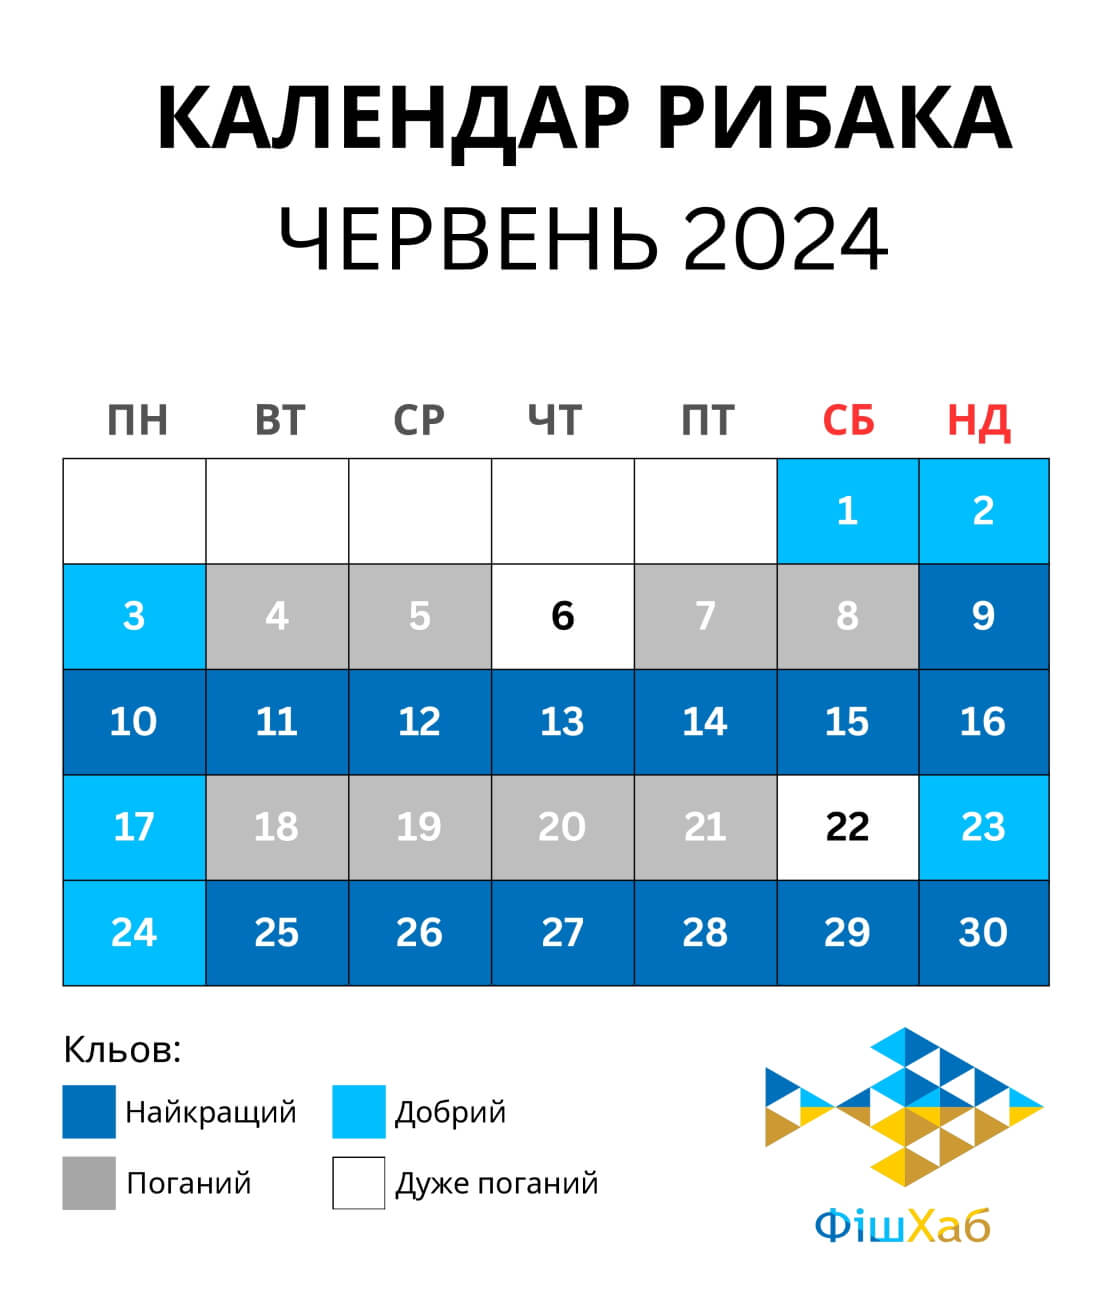 Календар рибака на червень 2024 року